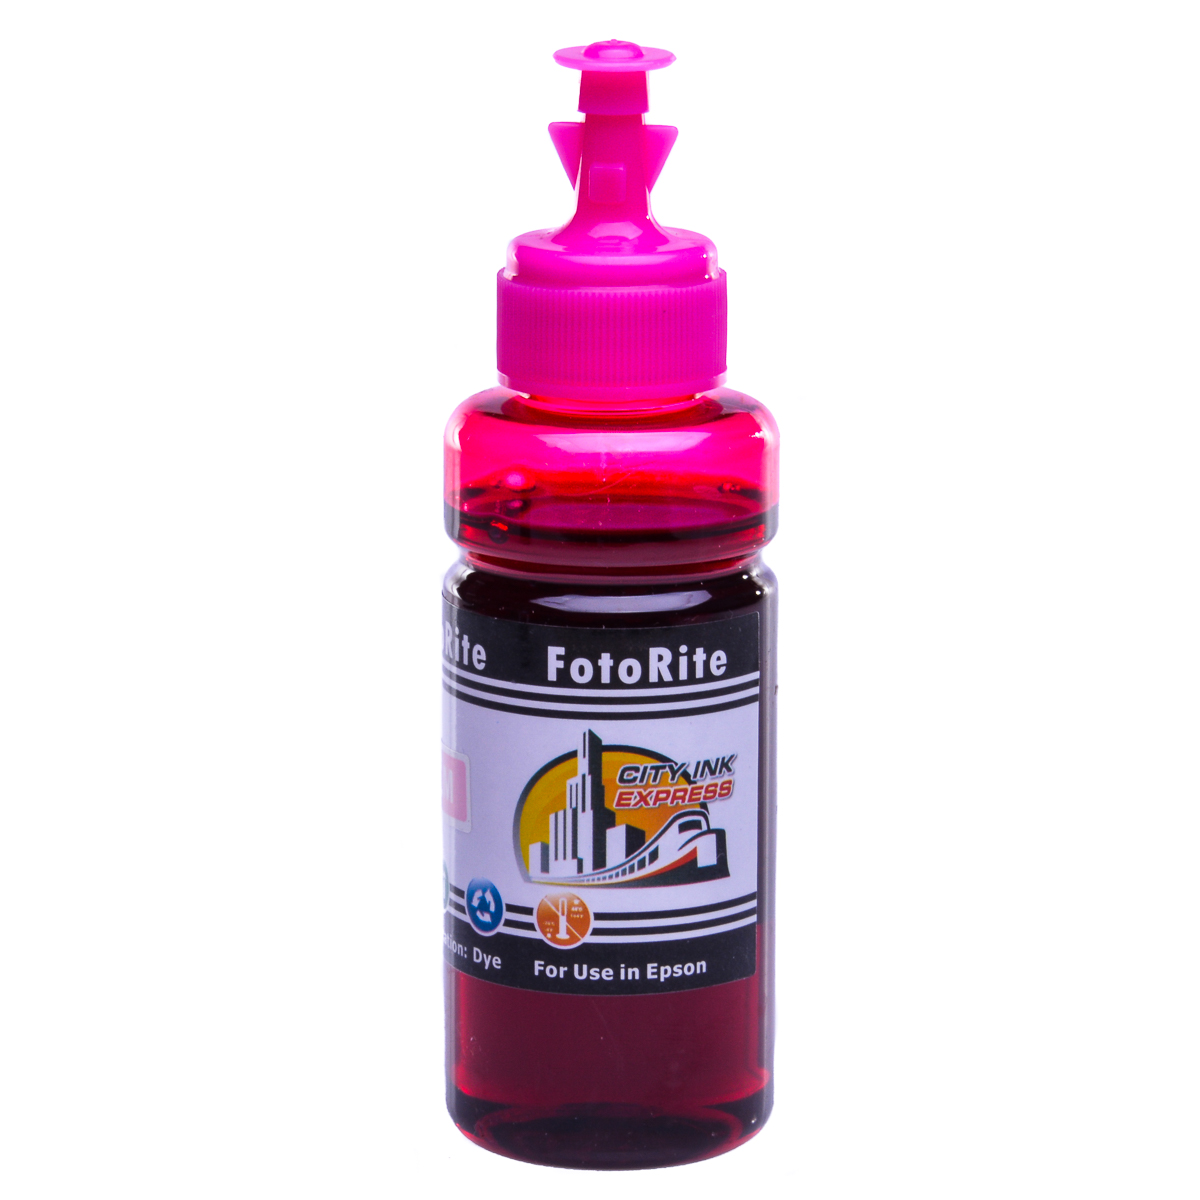 Cheap Light Magenta dye ink replaces Epson Stylus Photo 1400 - T0796 - CT079640